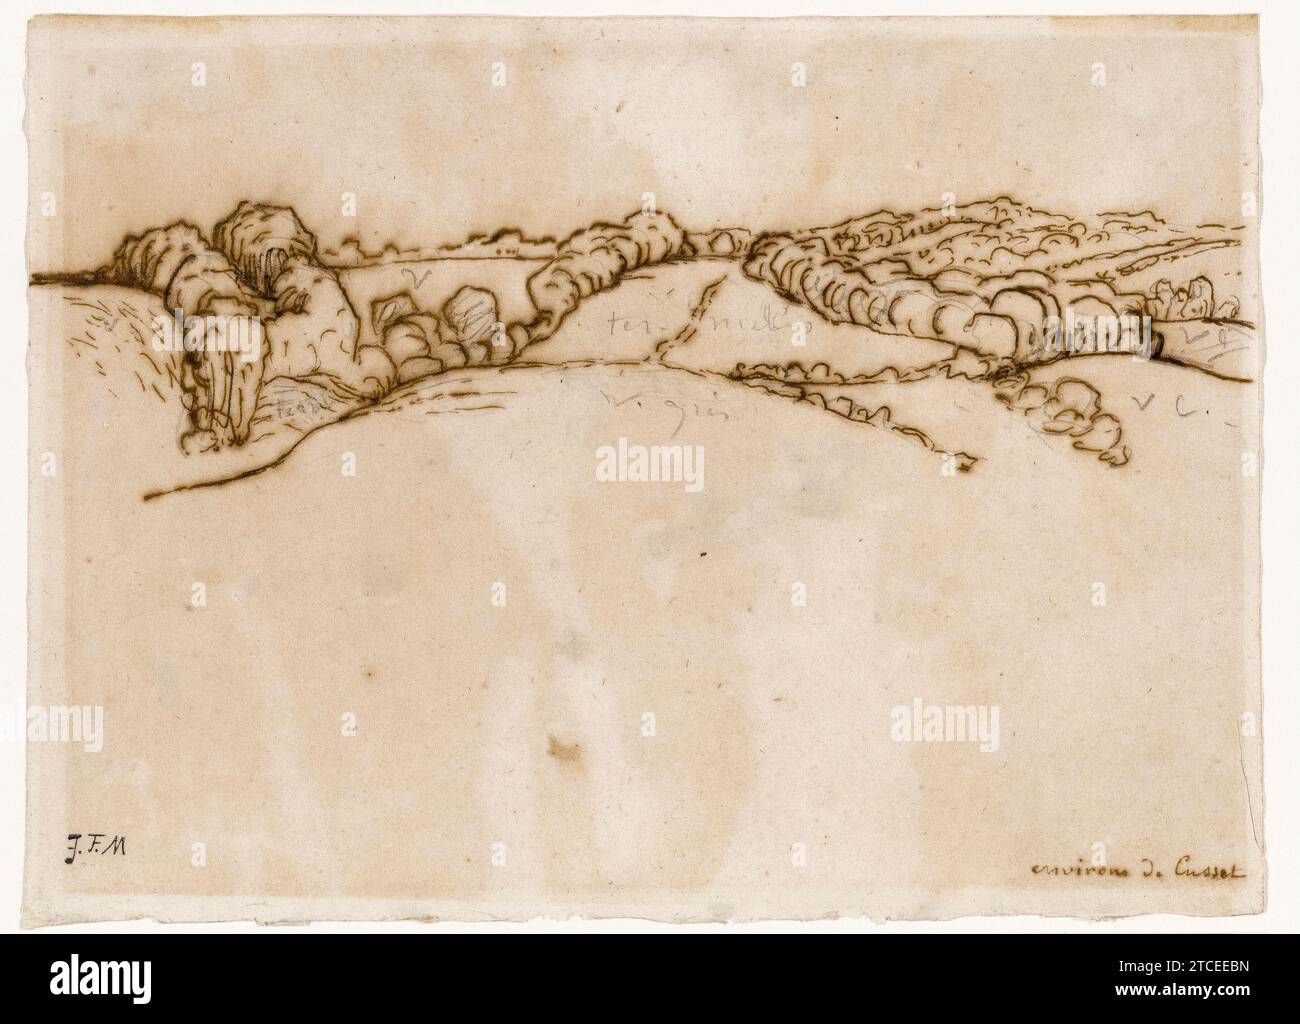 Jean Francois Millet, Environs de Cusset, landscape drawing in pen and ink over pencil, 1864-1871 Stock Photo